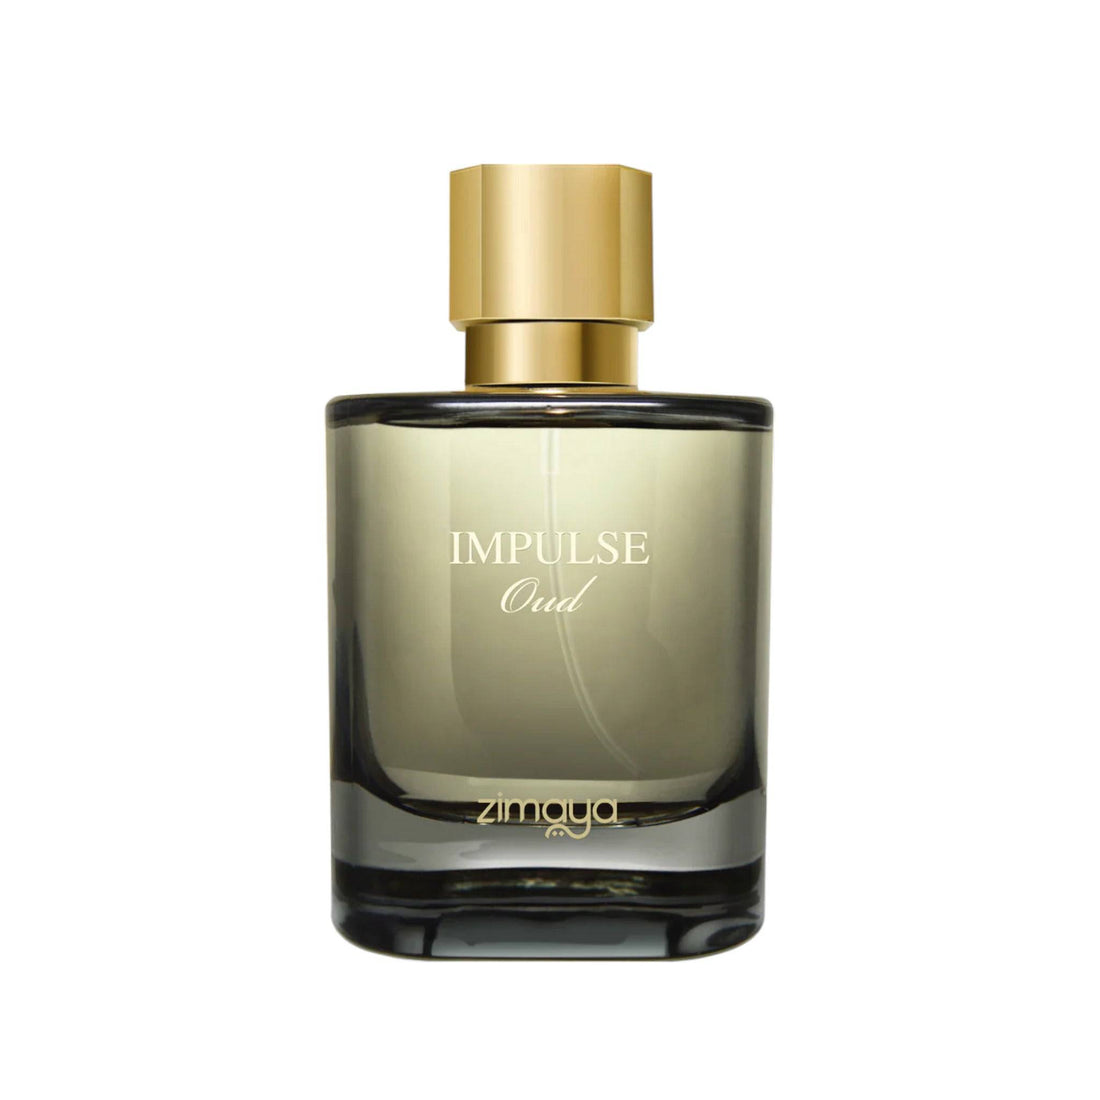 Luxurious 100ml bottle of Zimaya Impulse Oud Eau De Parfum, highlighting its opulent and sophisticated design.